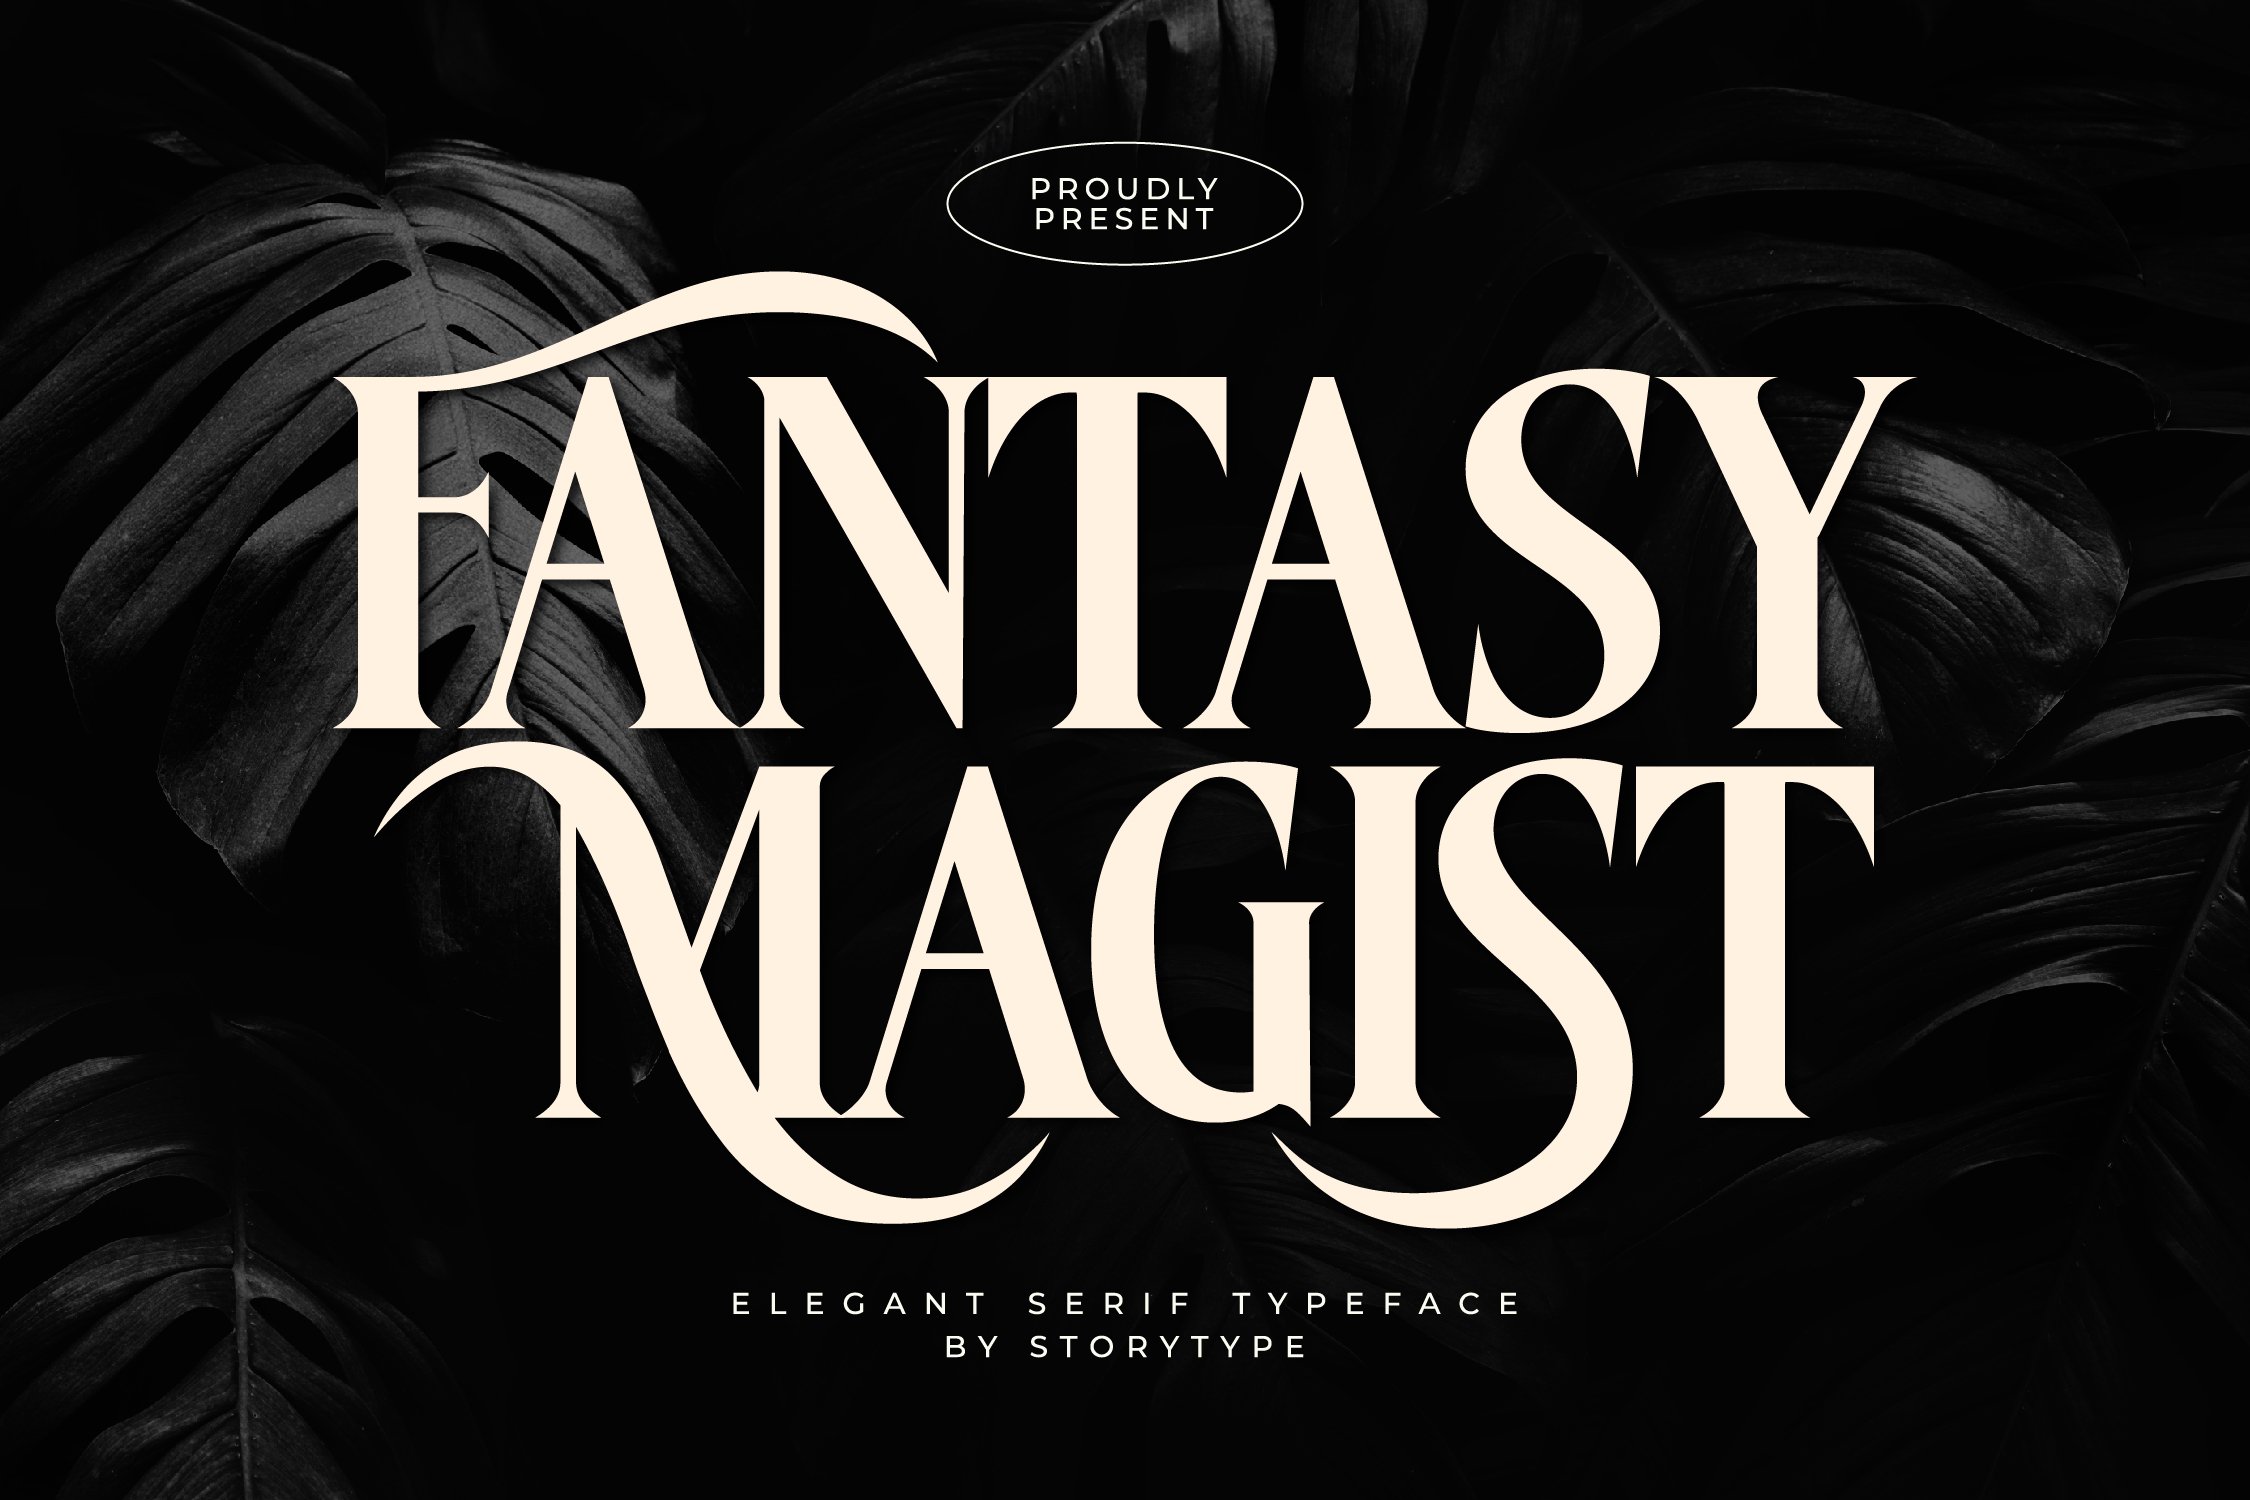 Fantasy Magist Elegant Serif Font cover image.